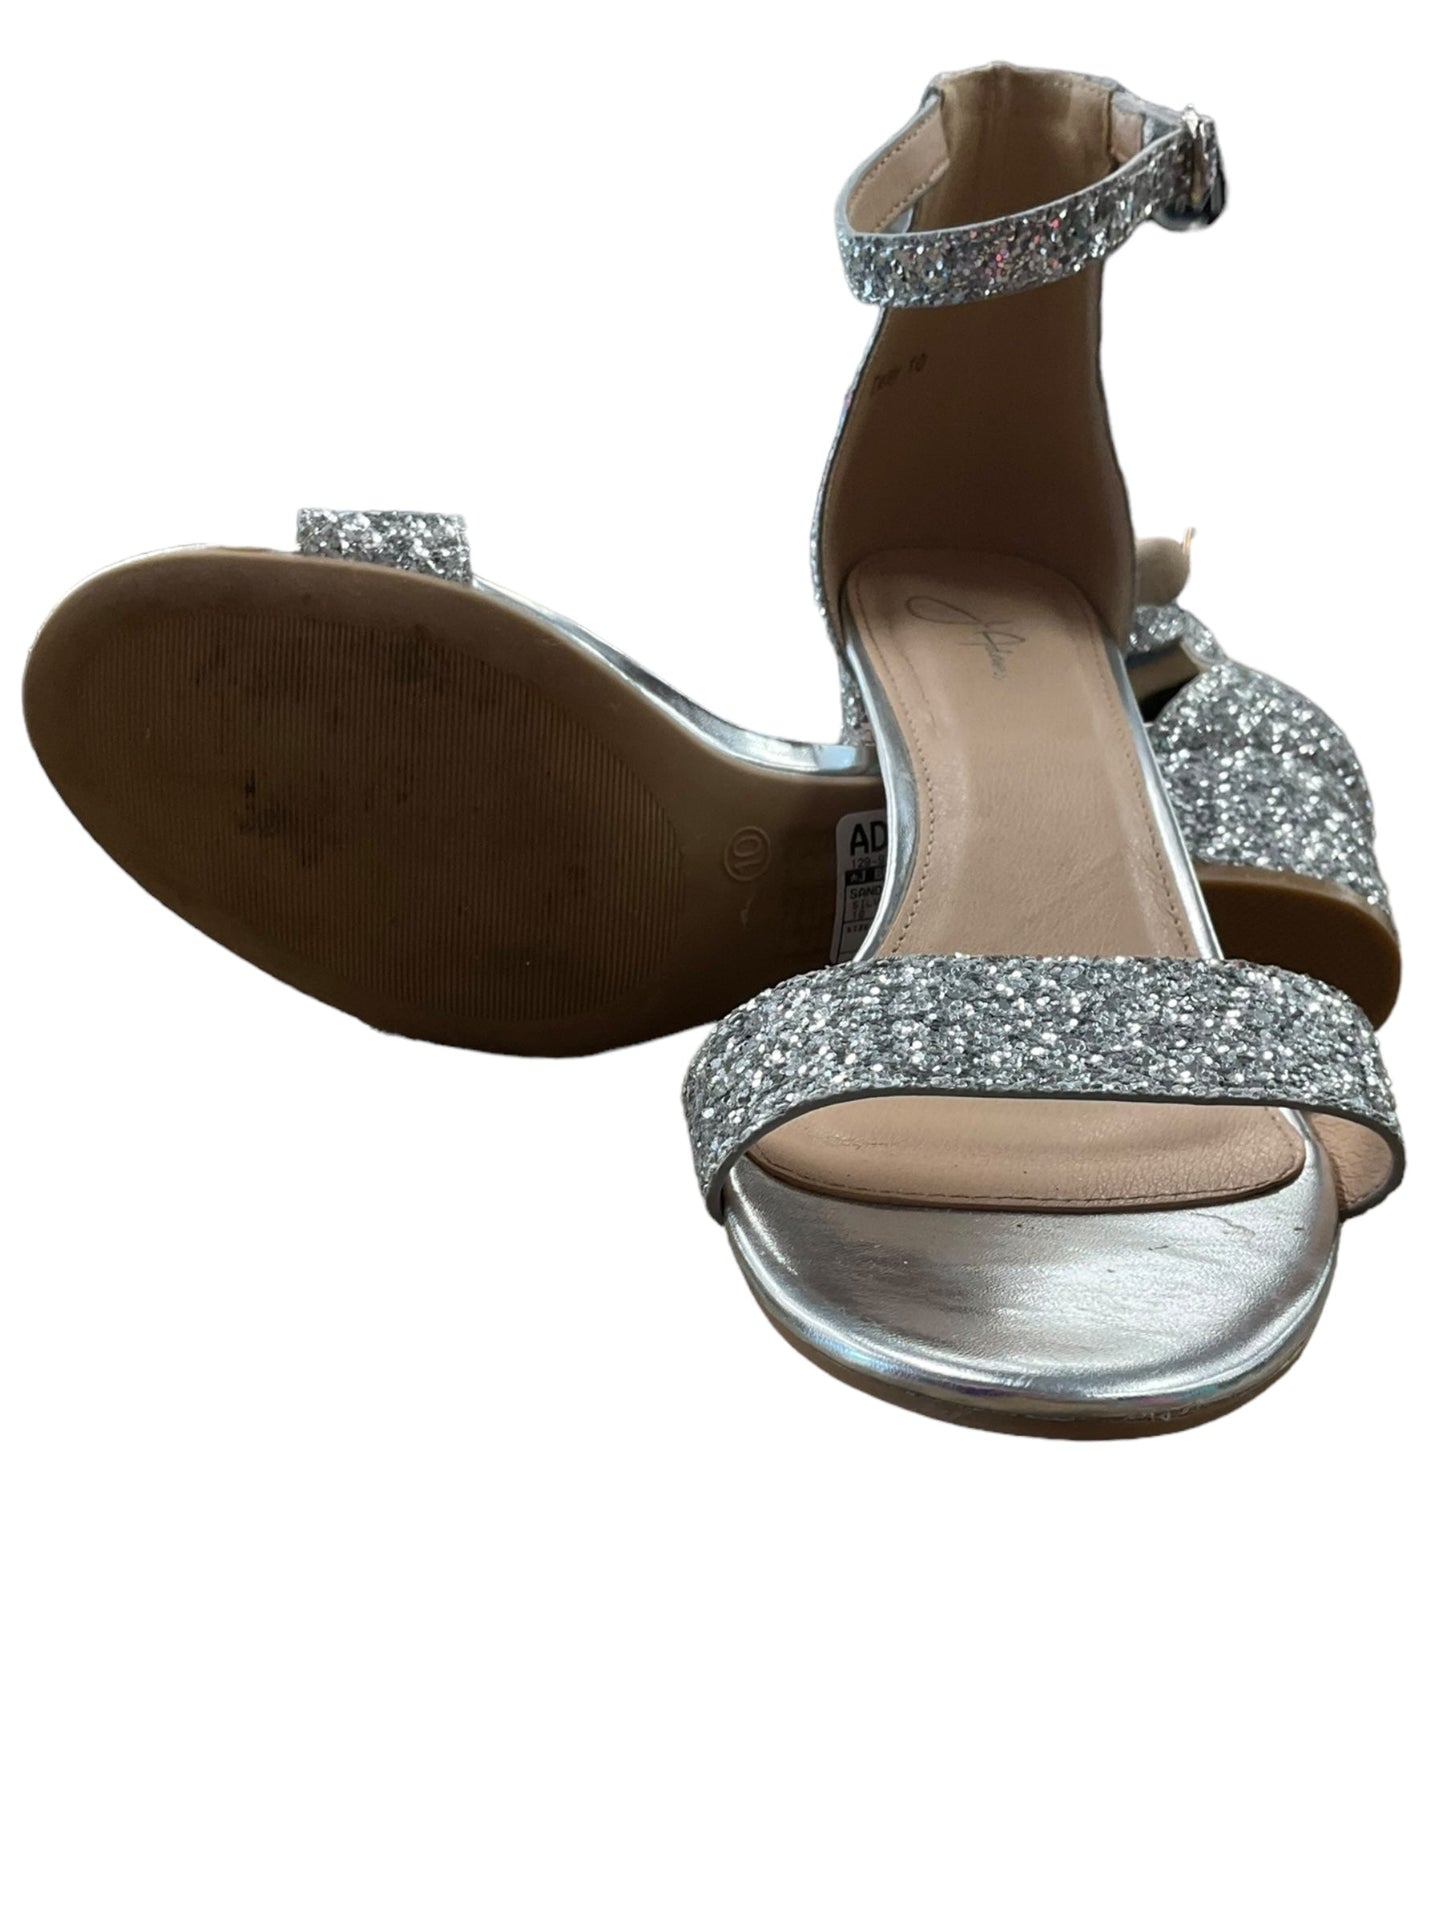 Silver Sandals Heels Platform J Brand, Size 10